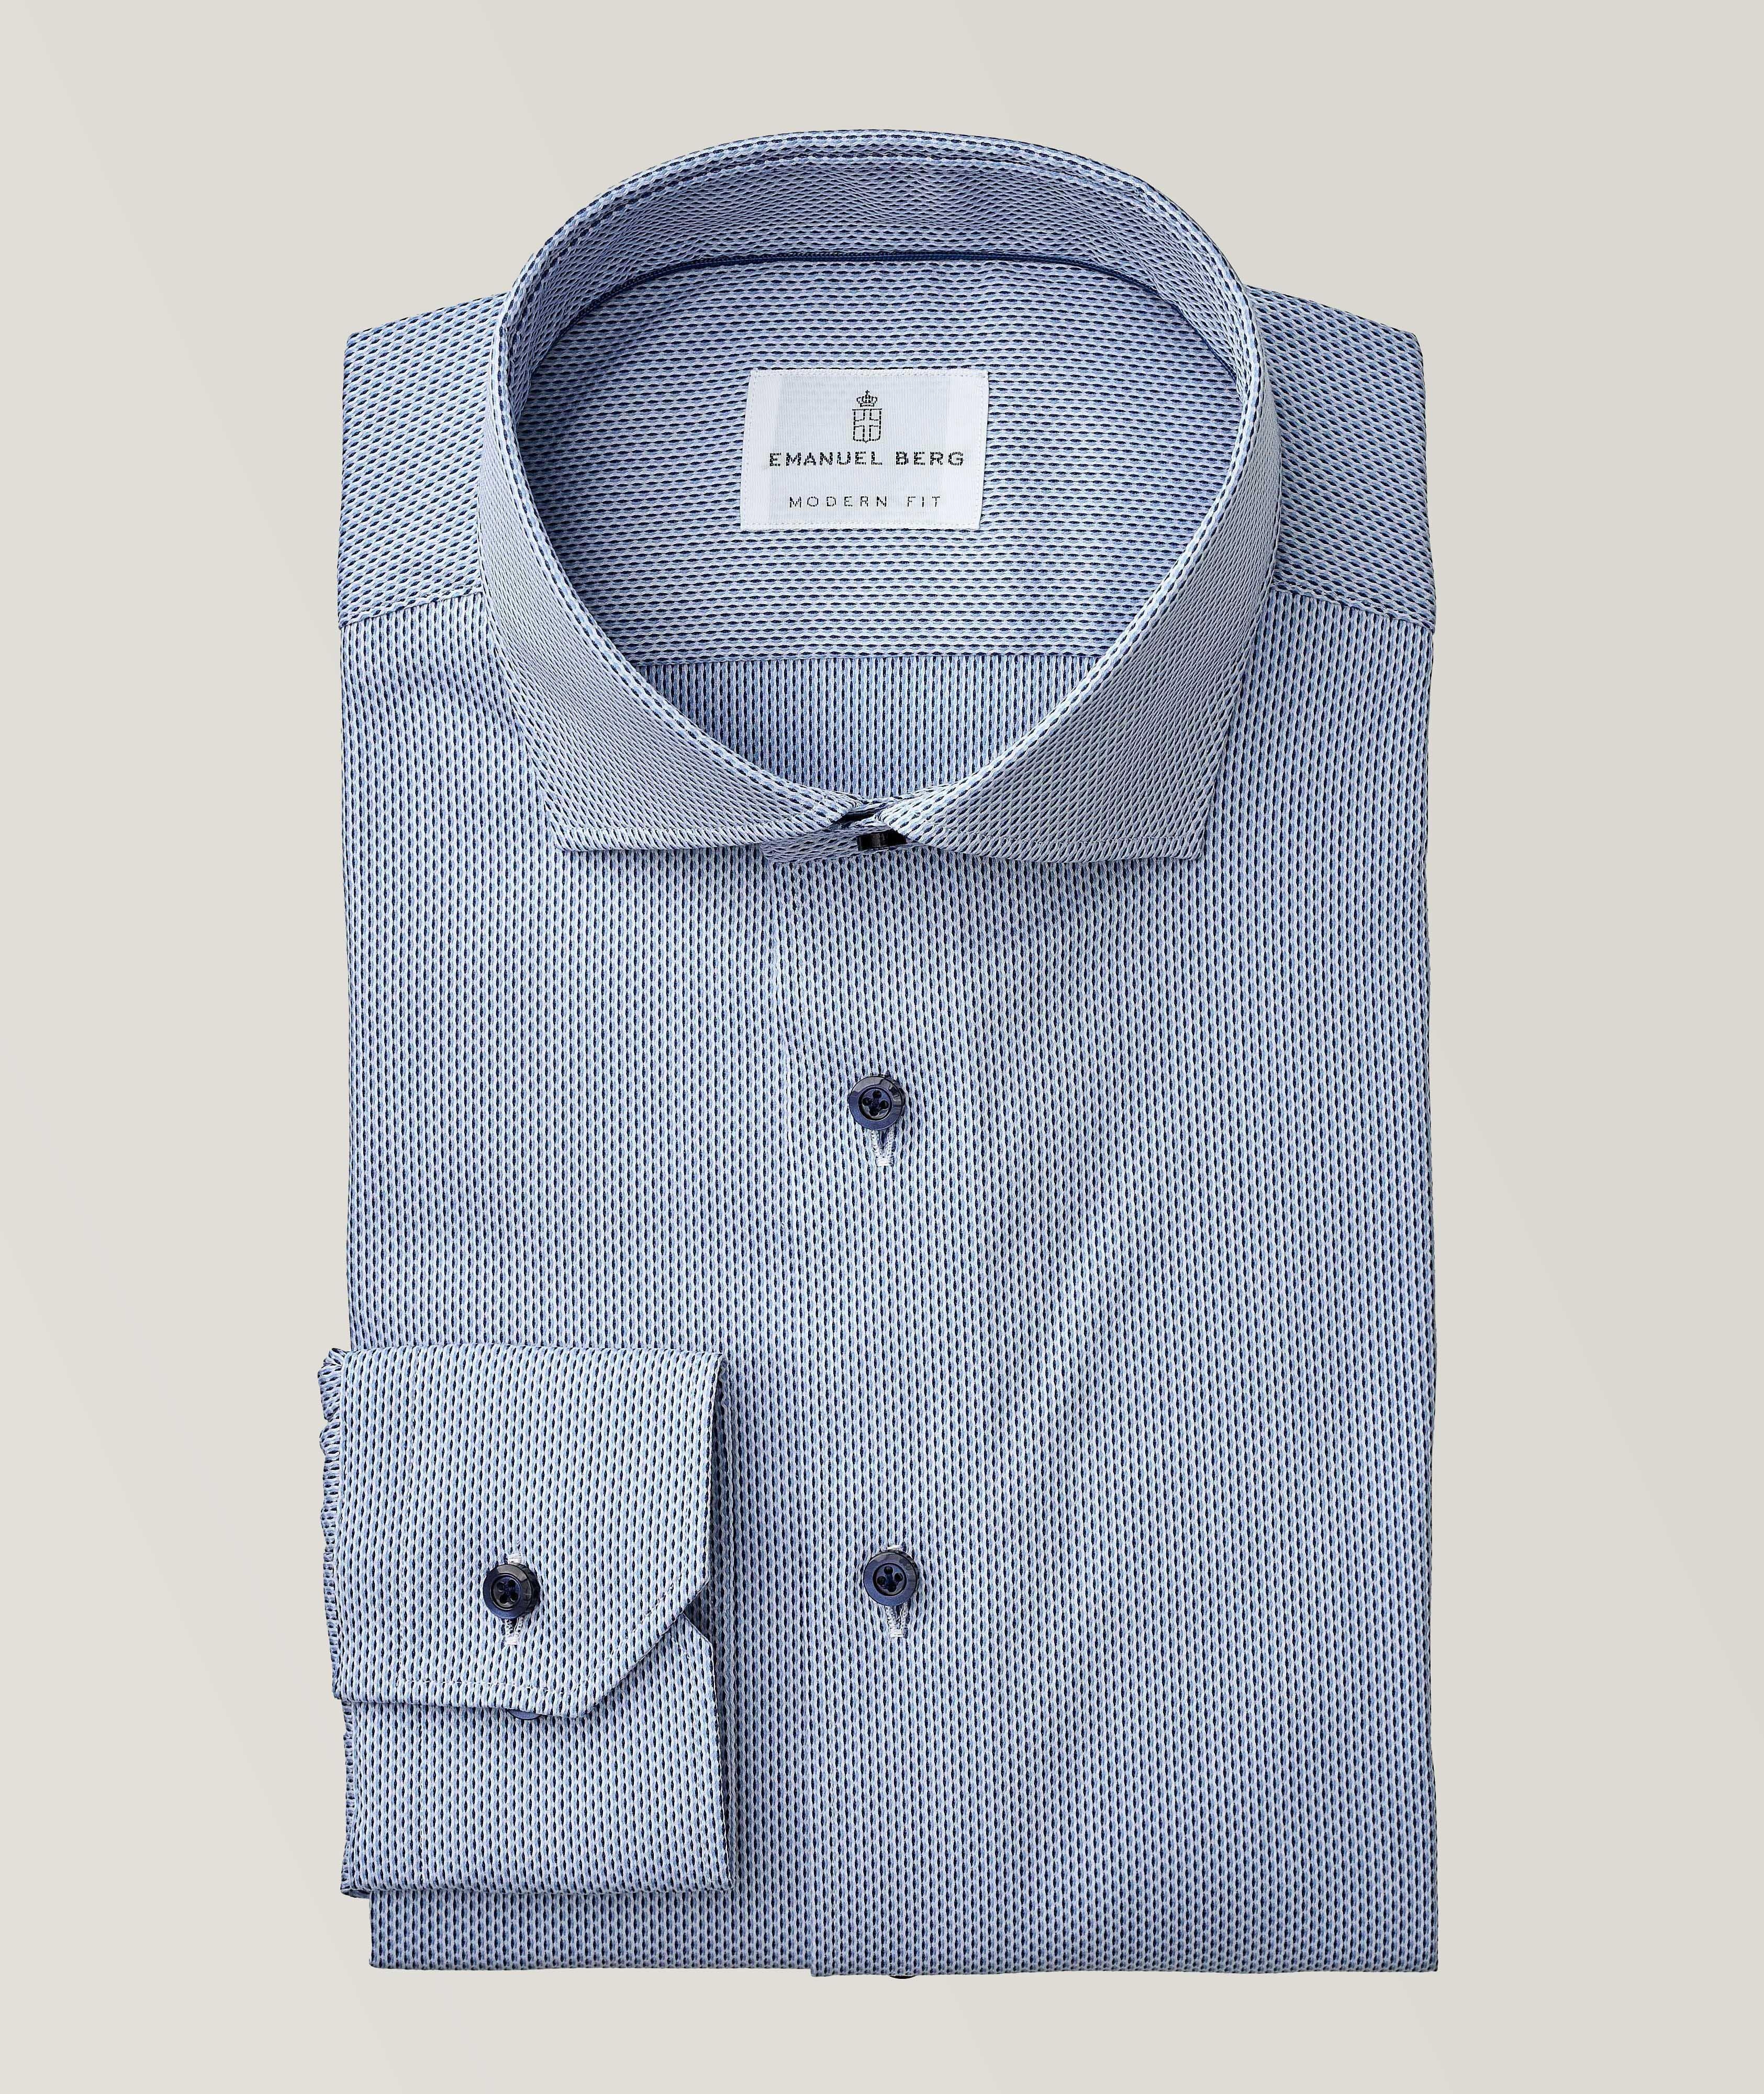 Geometric Print Cotton Twill Dress Shirt image 0